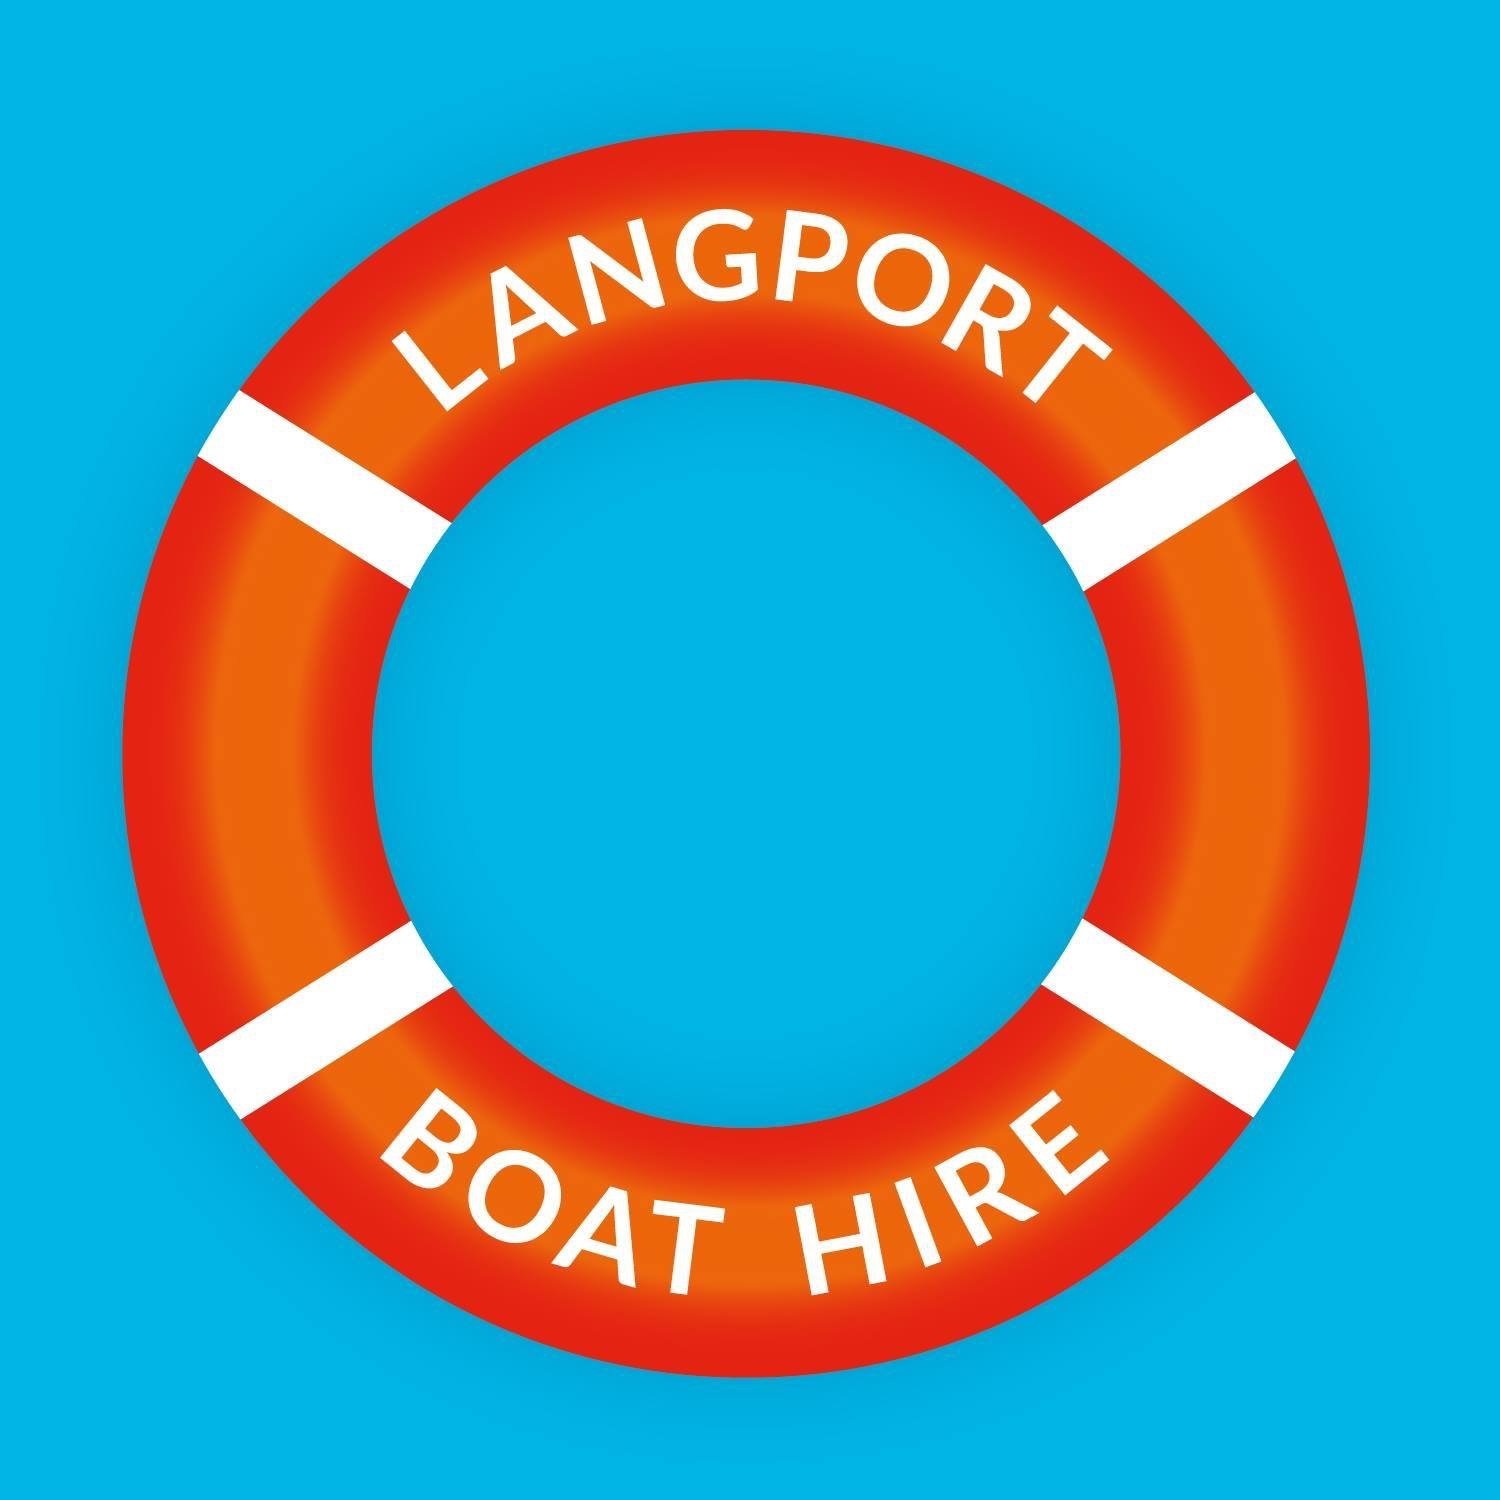 Langport Boat Hire